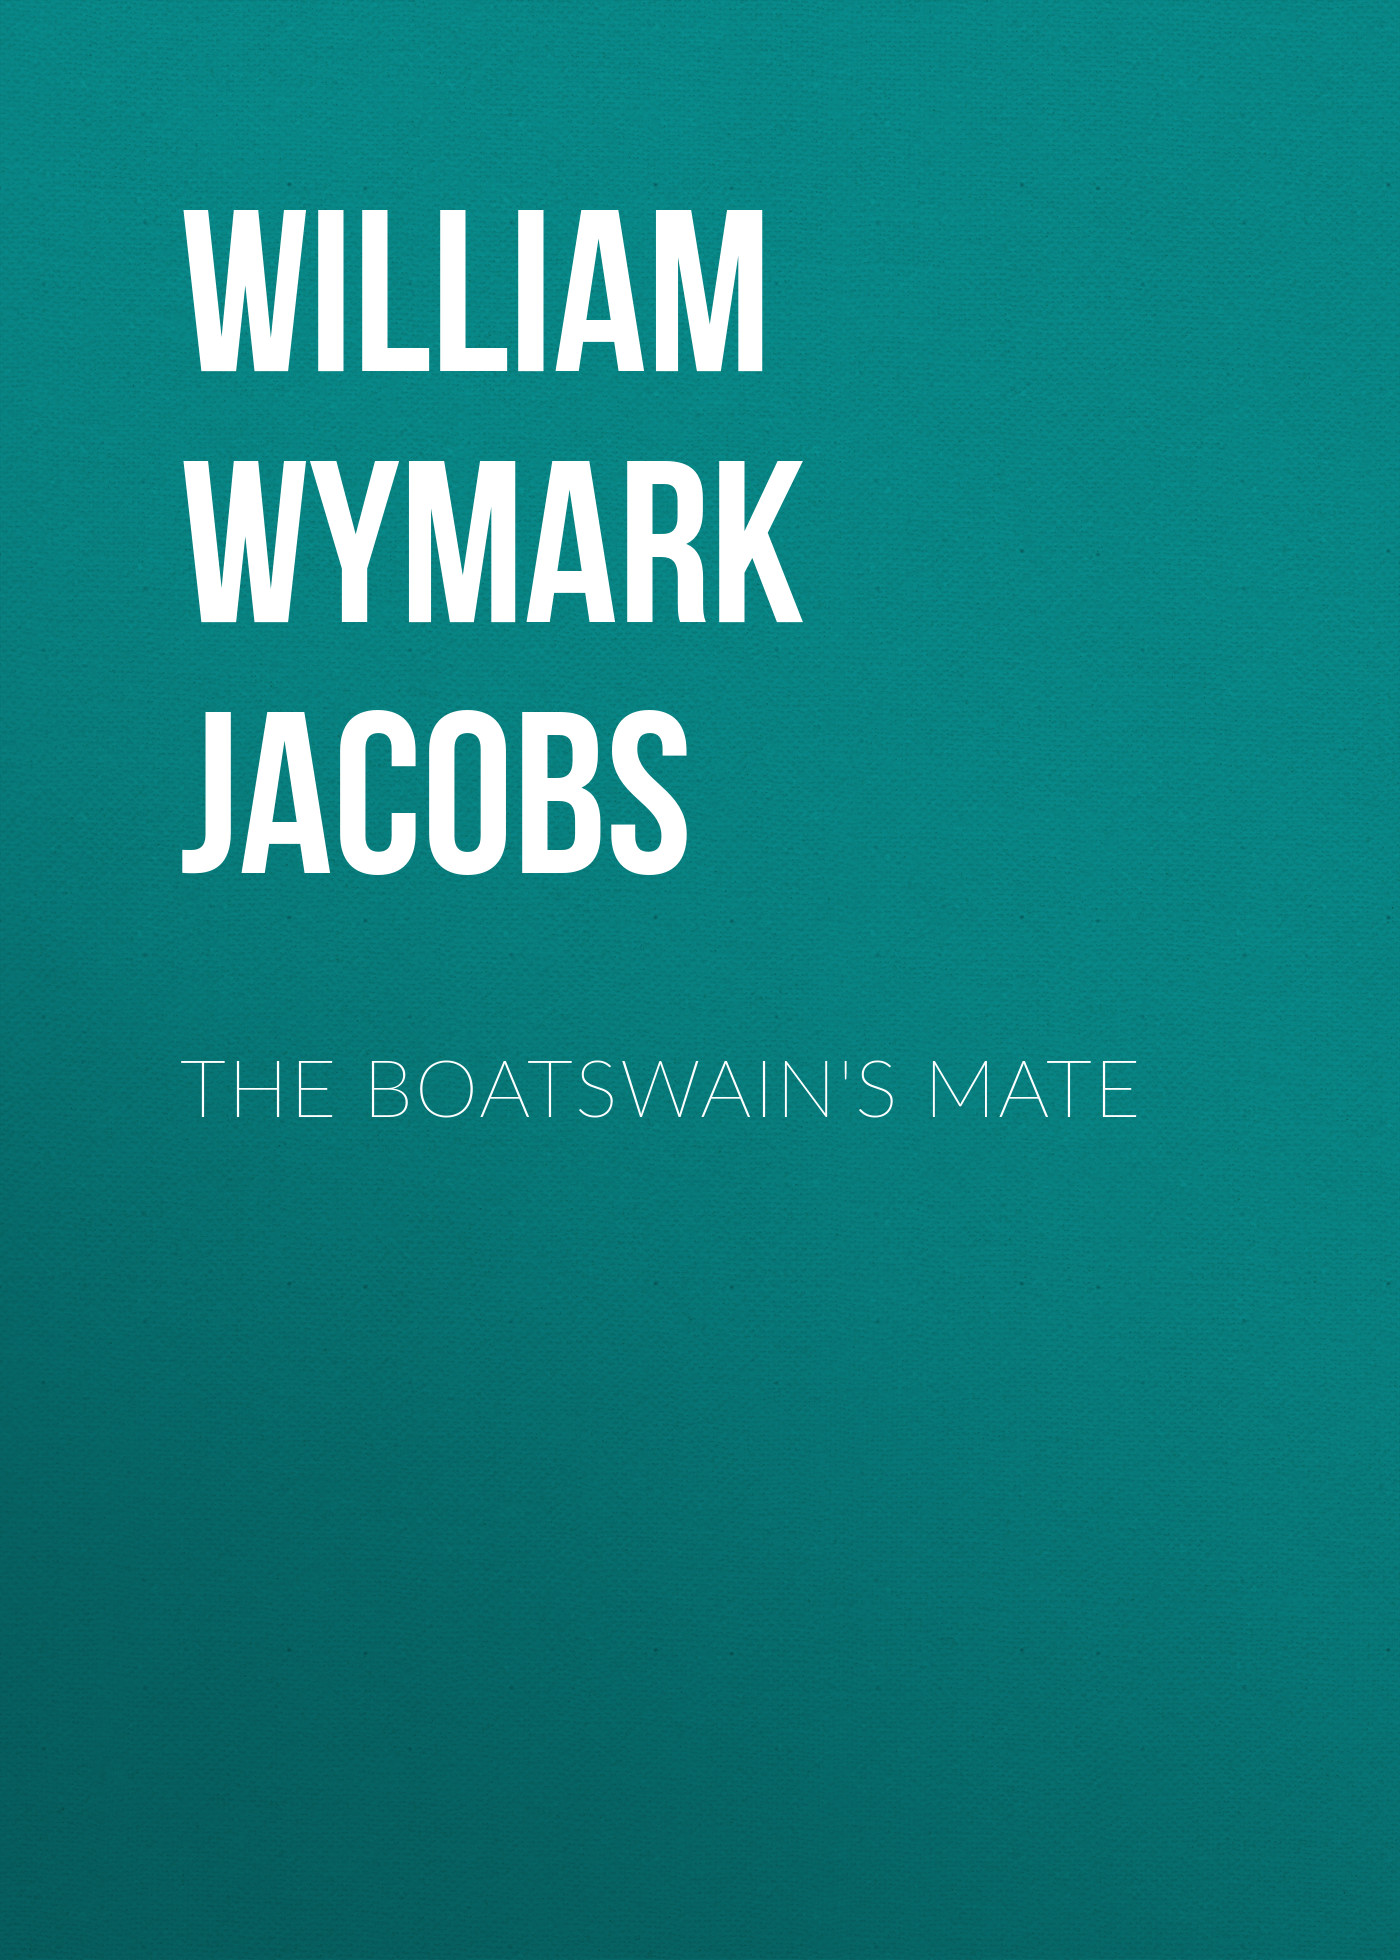 The Boatswain's Mate